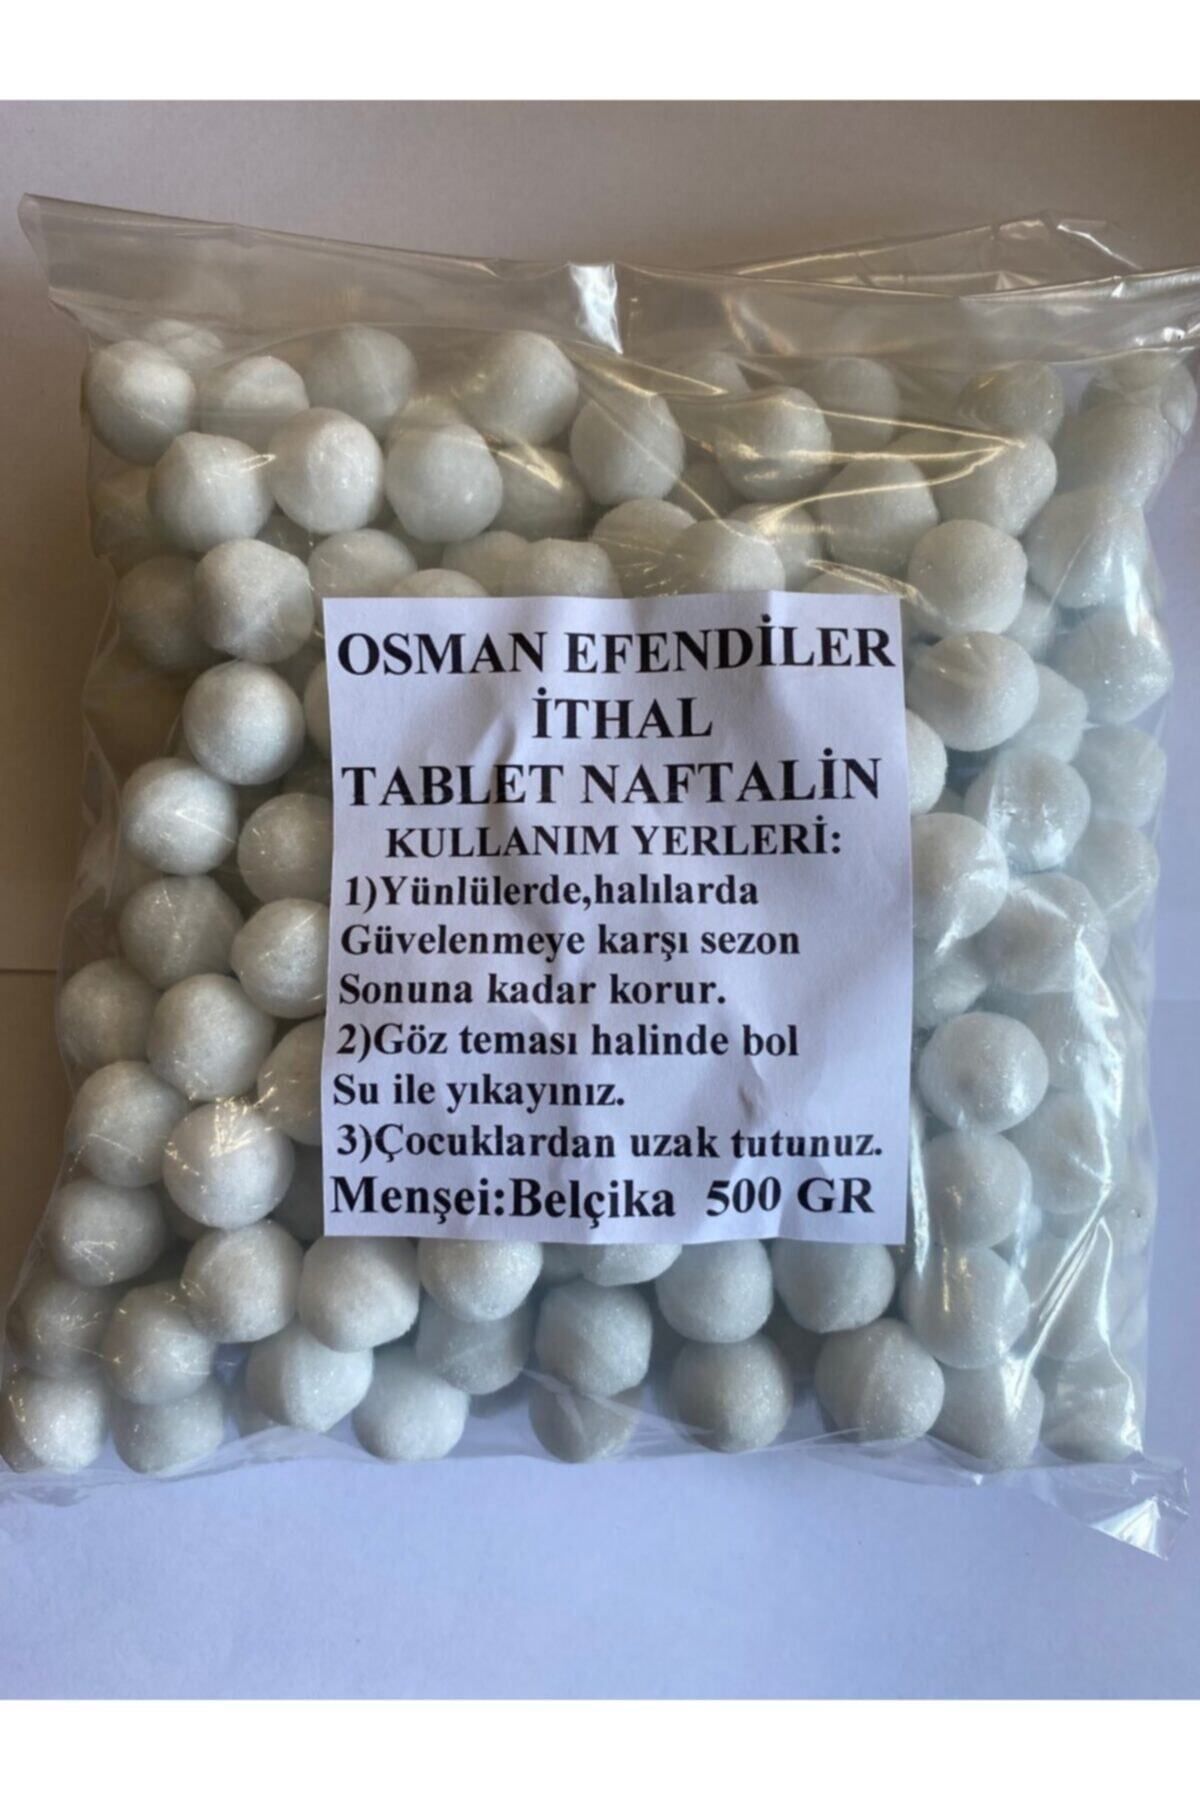 osmanefendiler Tablet(BİLYA)naftalin 500 gr